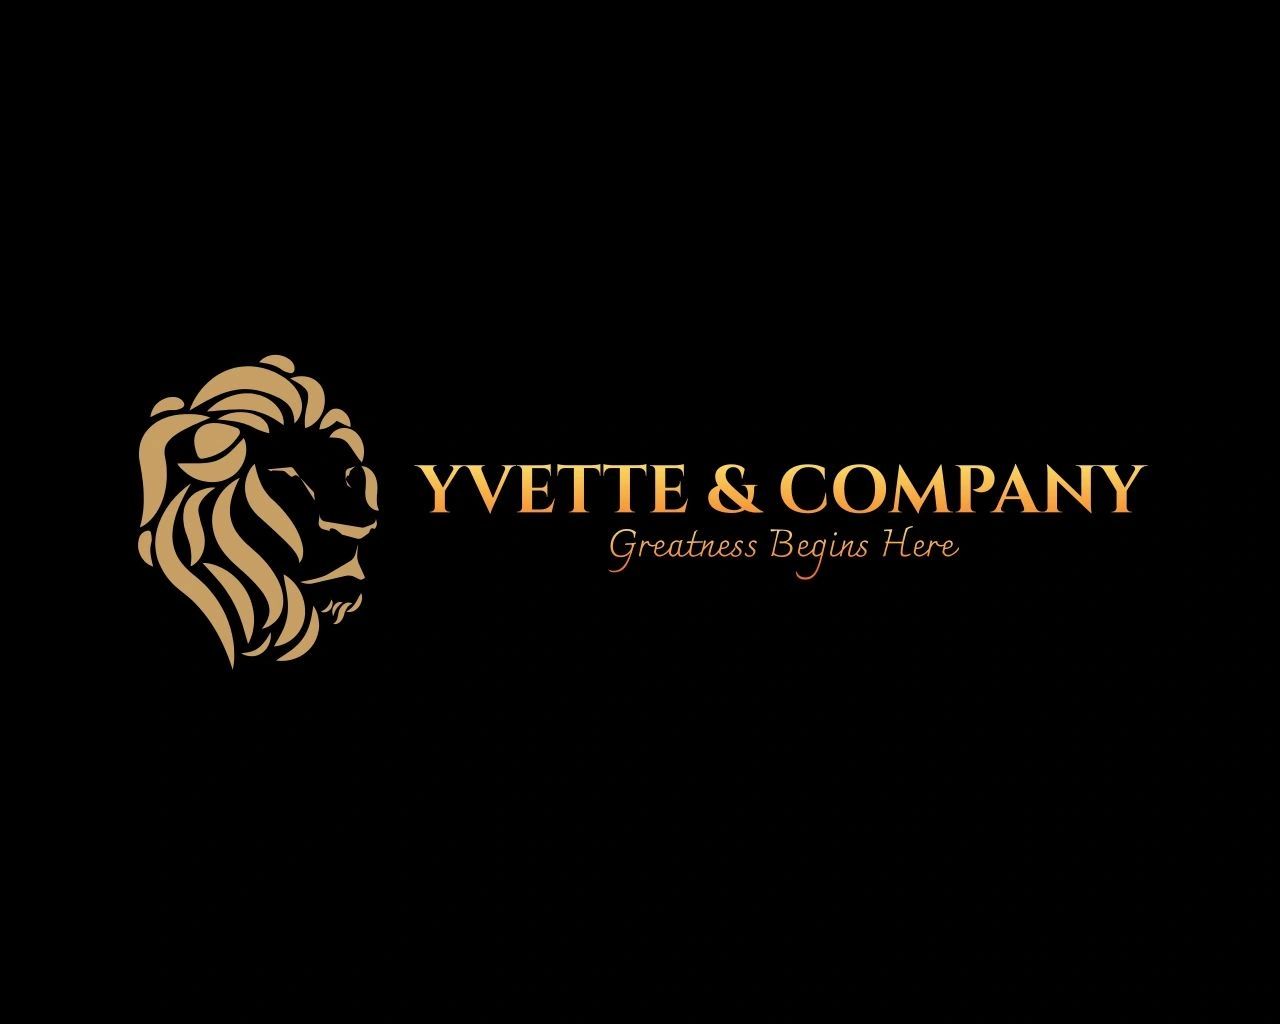 Yvette & Company